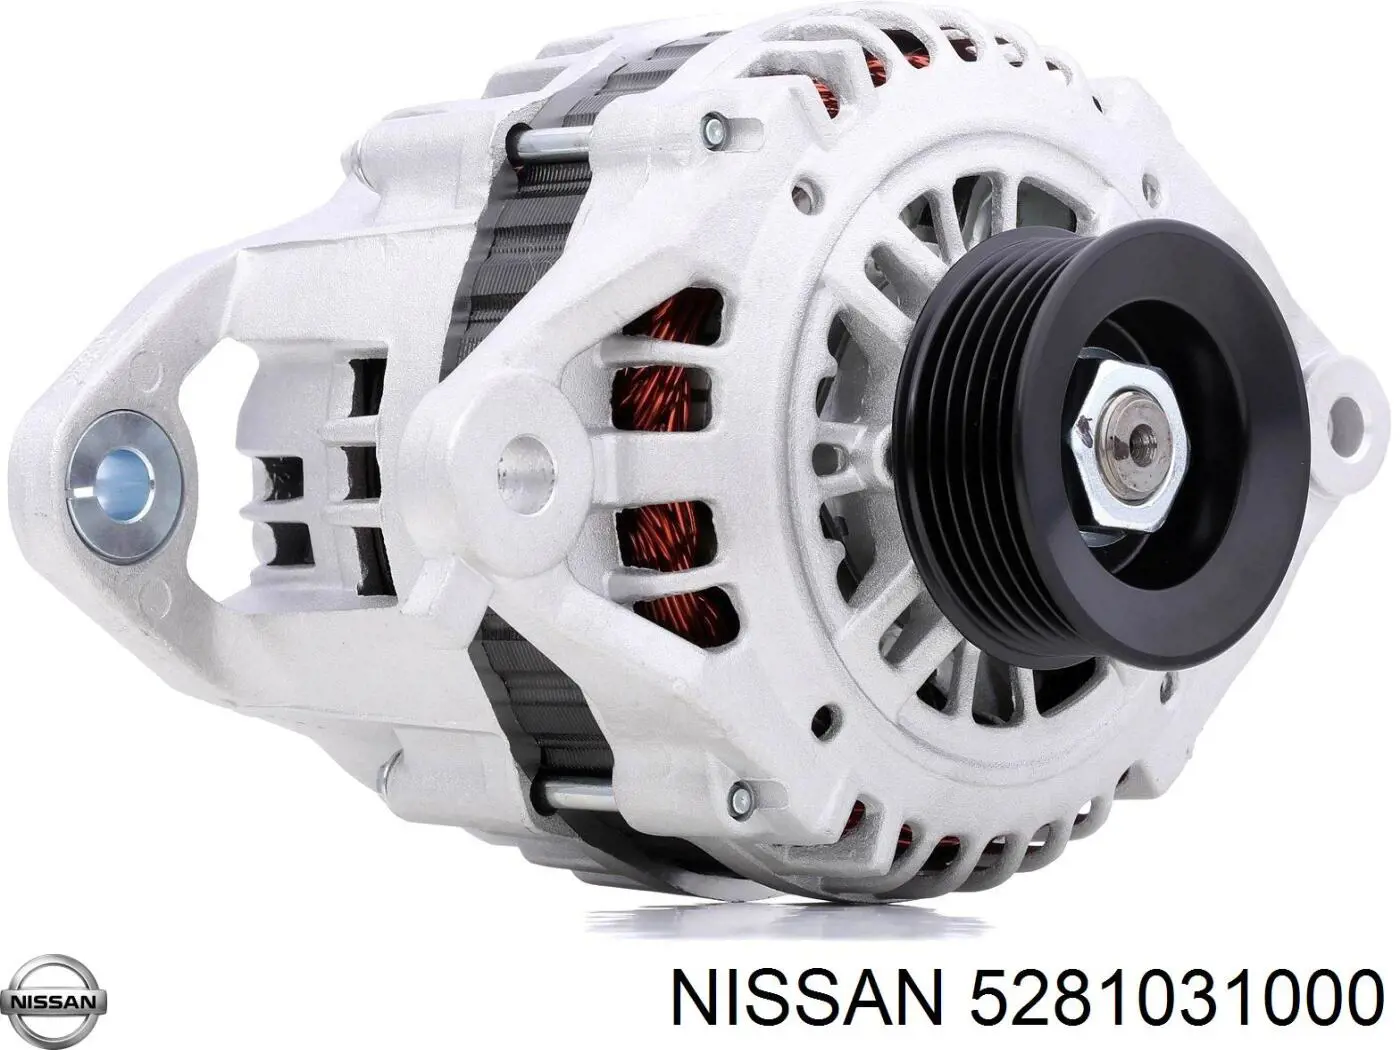 5281031000 Nissan alternador